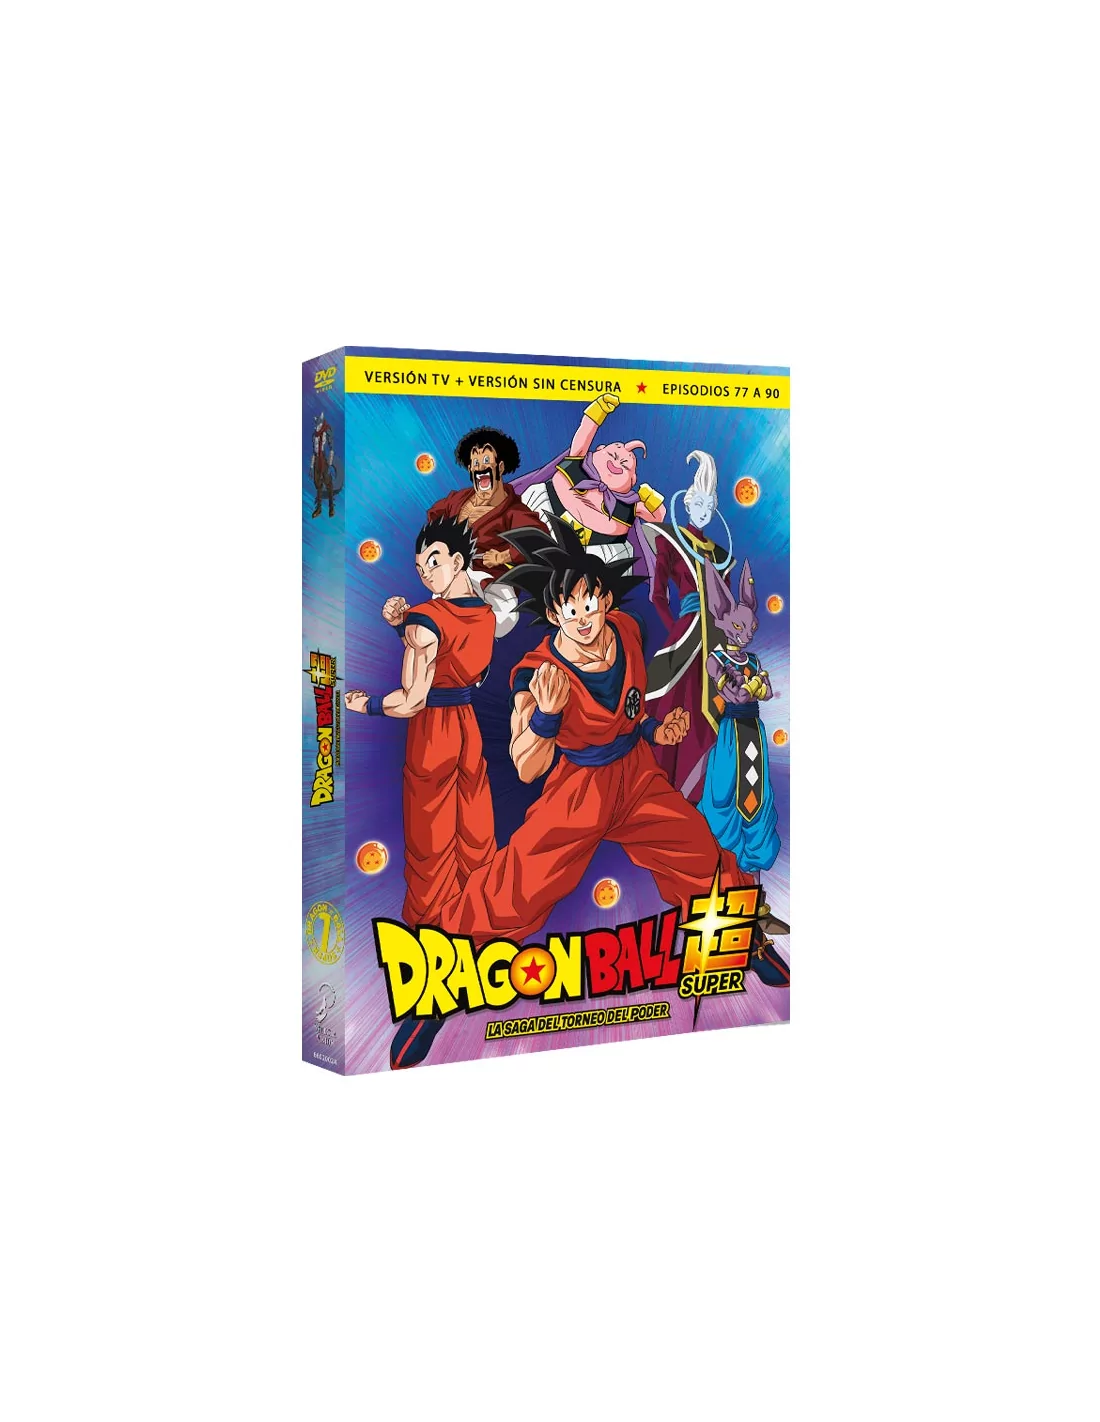 DRAGON BALL SUPER SAGA SOBREVIVENCIA COMPLETO EM 7 DVDS